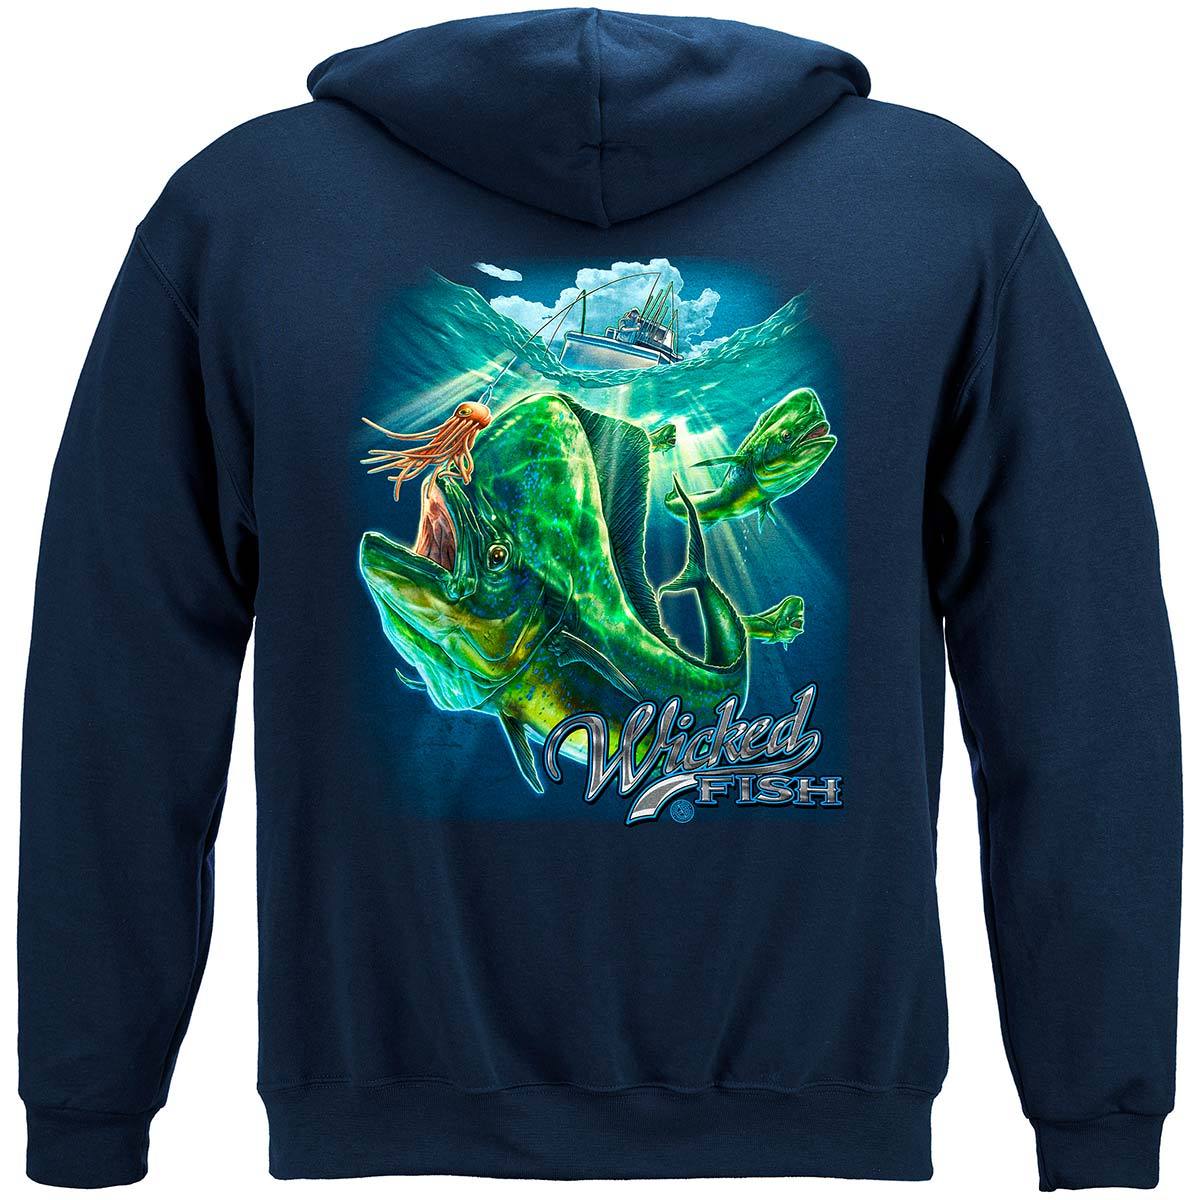 Wicked Fish Mahi Mahi Premium T-Shirt